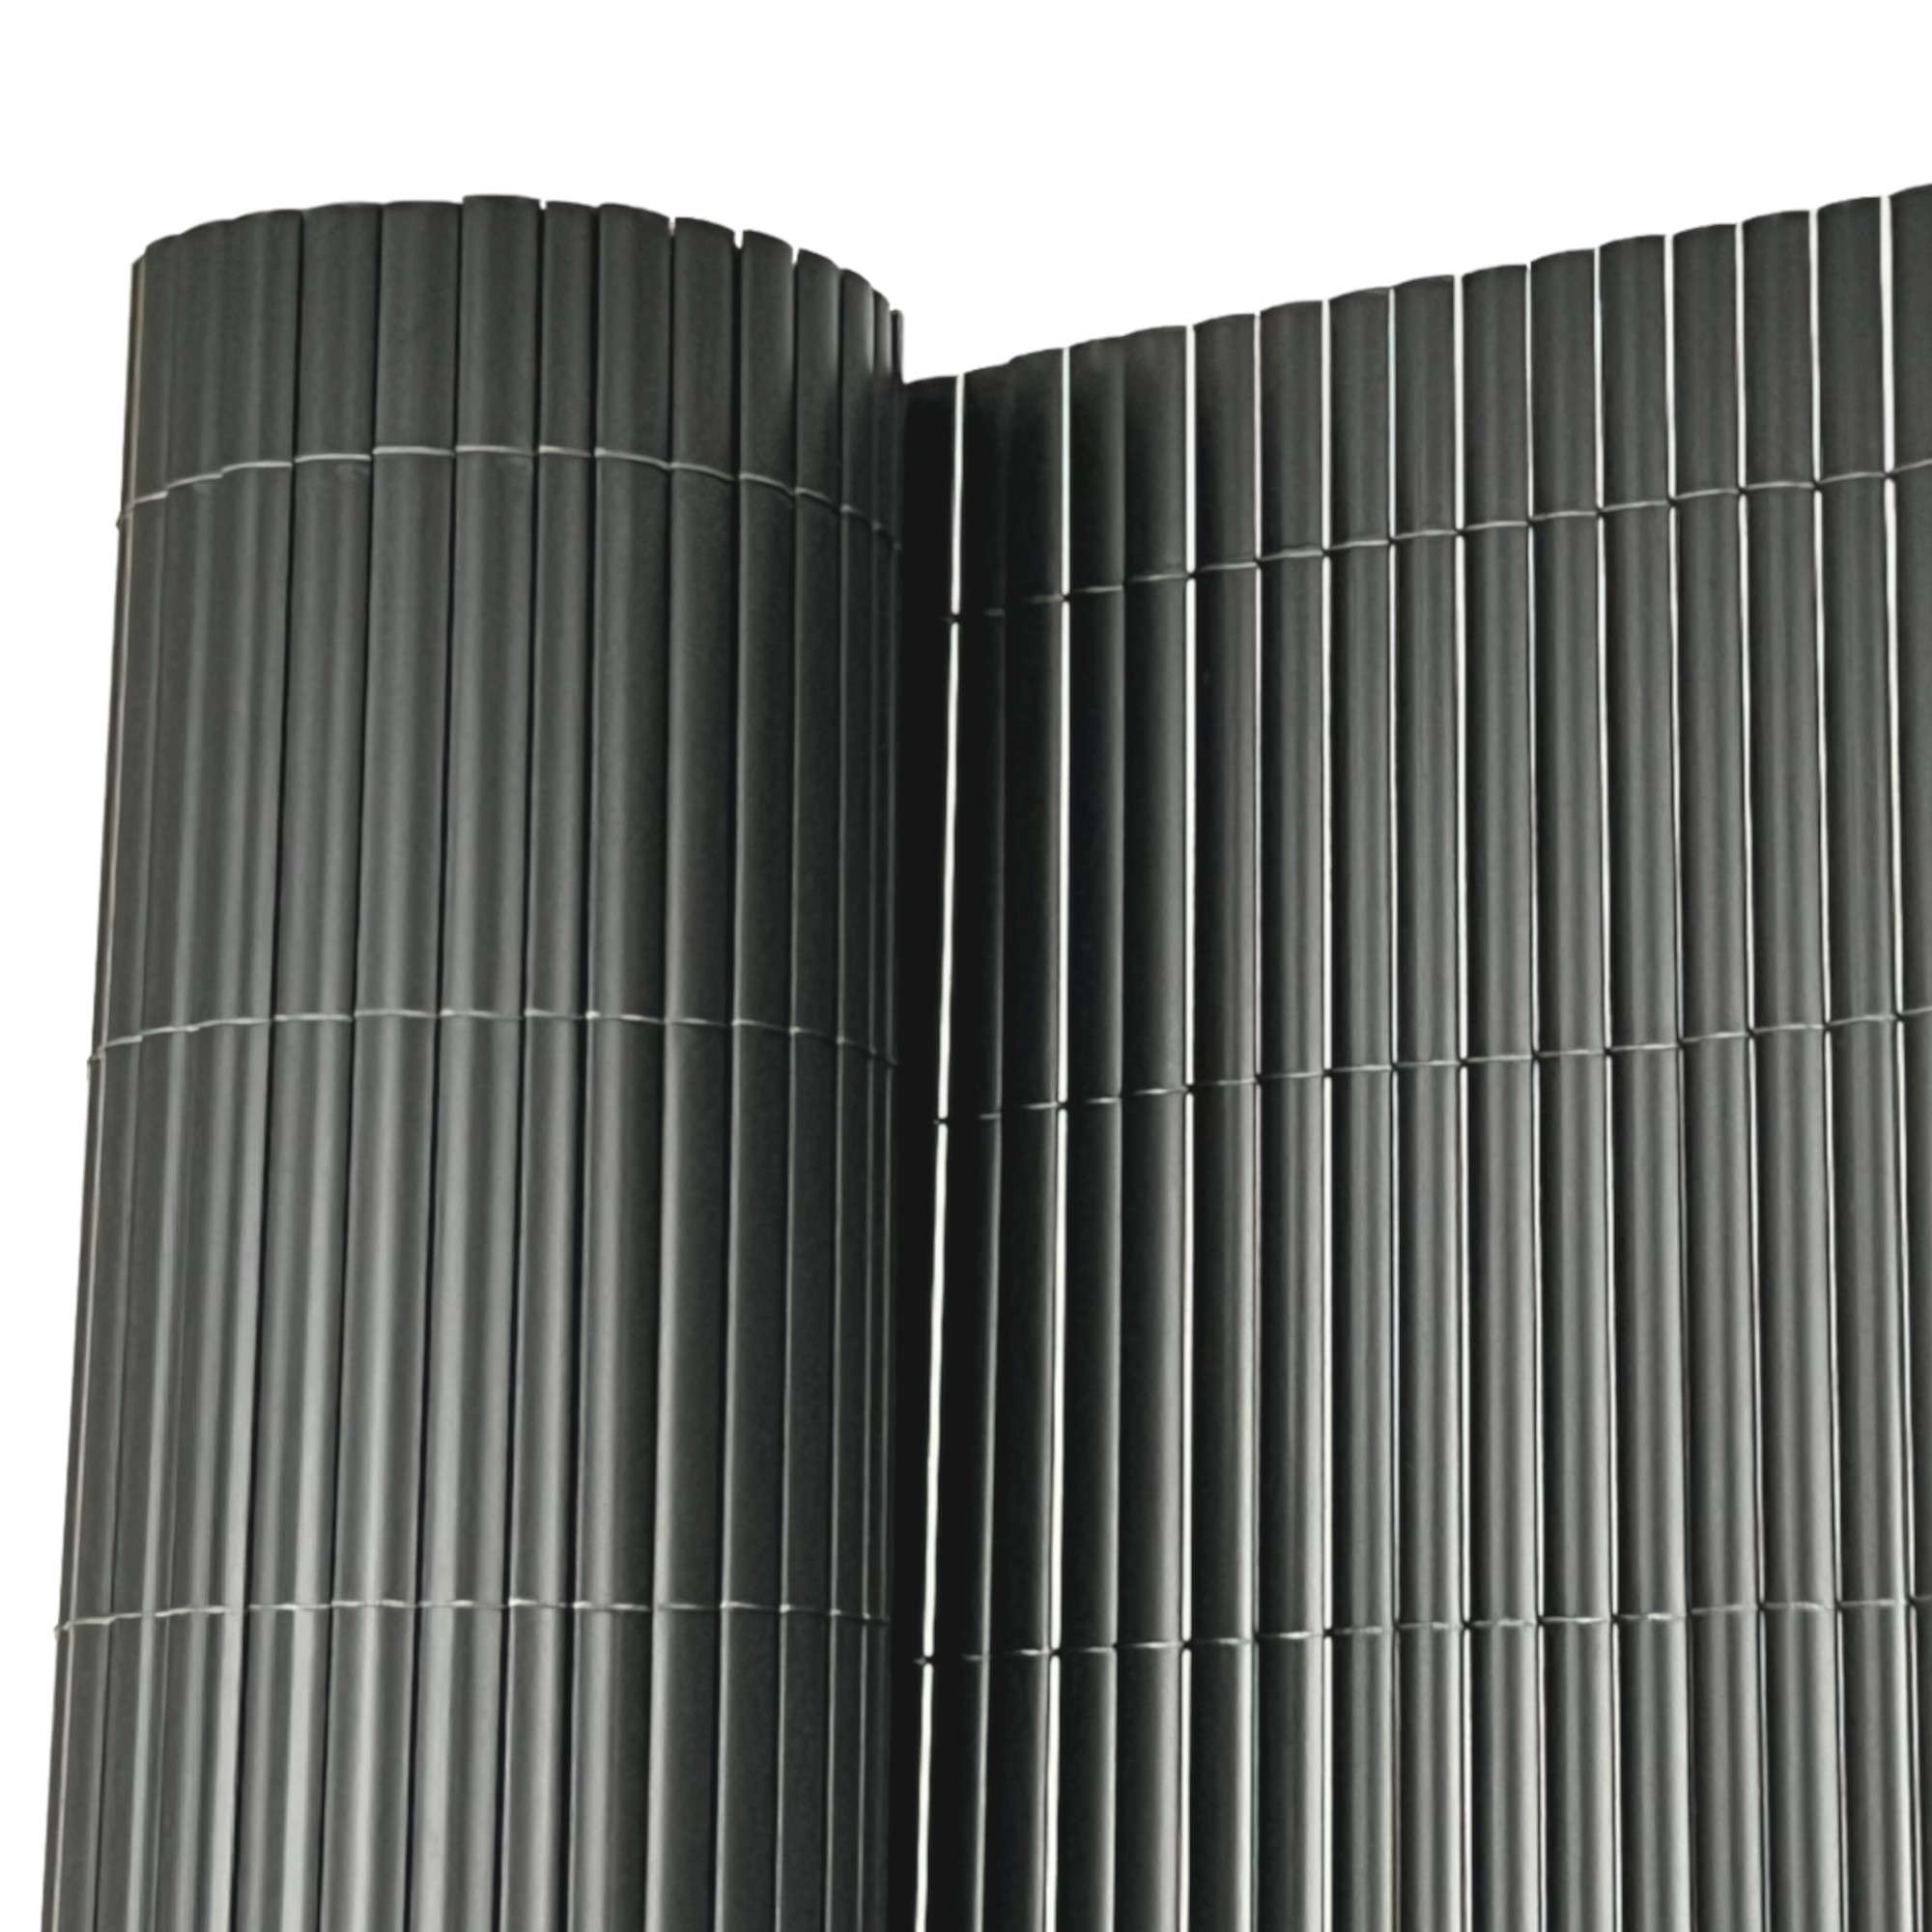 4m x 1.2m PVC Fencing (Grey) - Click Image to Close